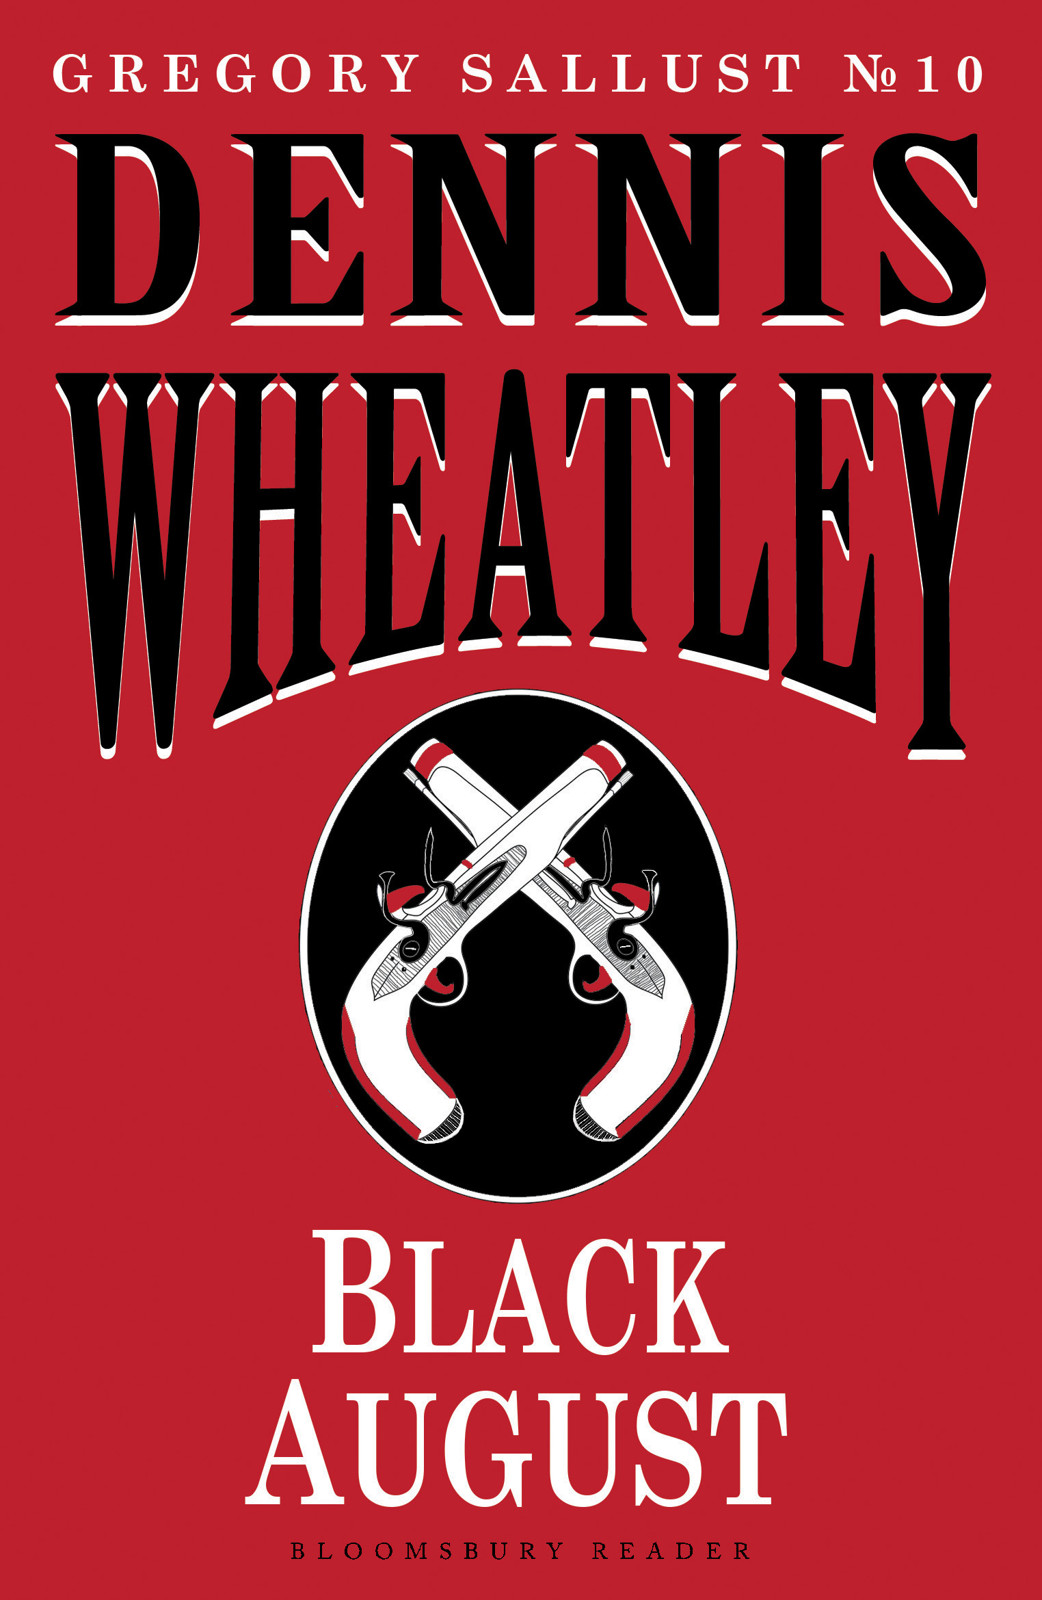 Black August by Dennis Wheatley